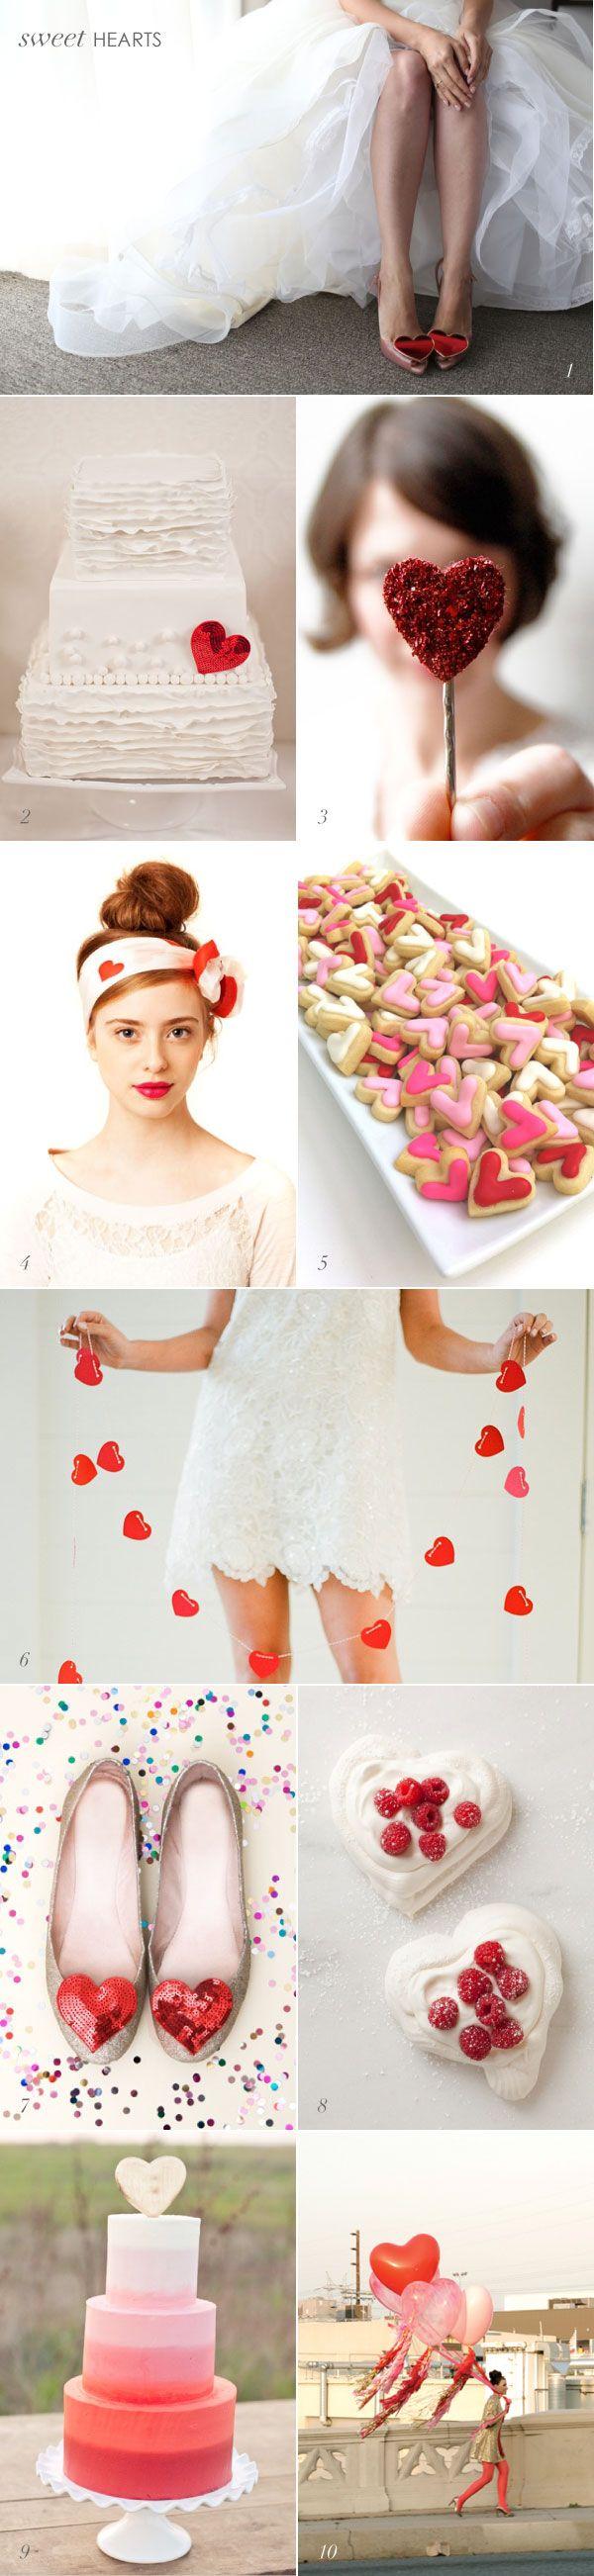 Wedding - Current Crush: Sweet Hearts